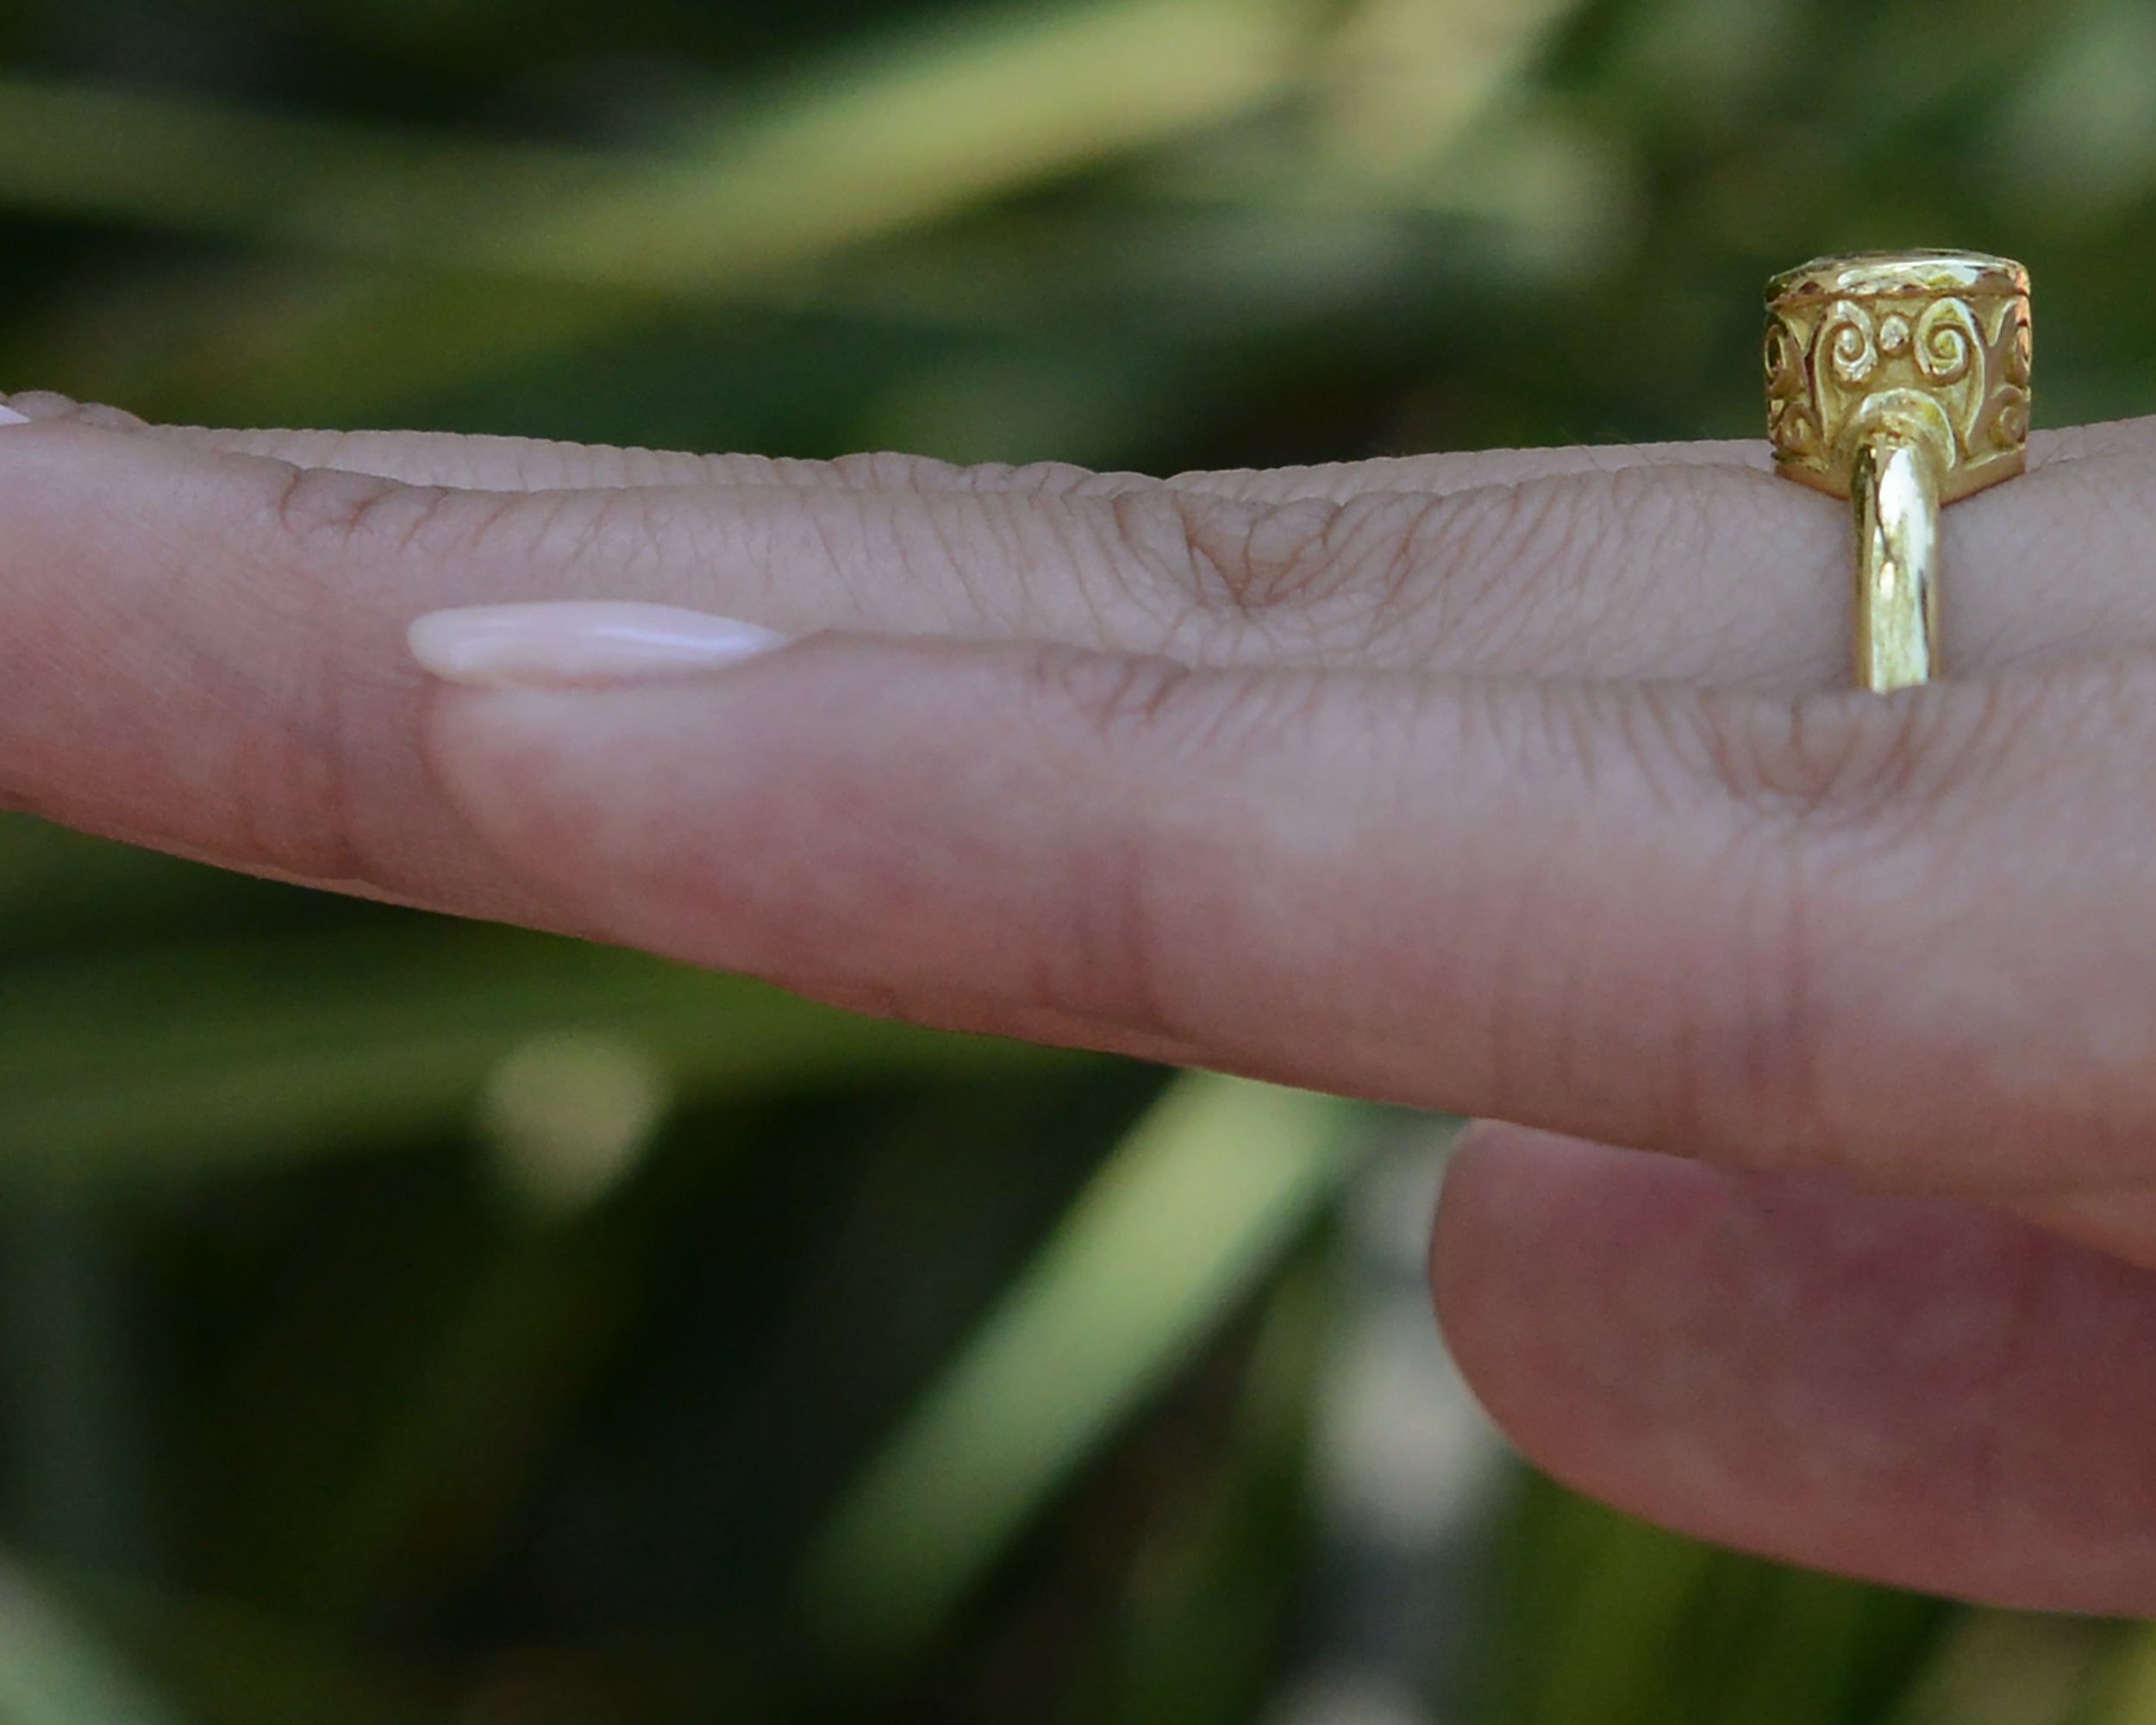 Vintage High Karat Gold White Sapphire Engagement Ring